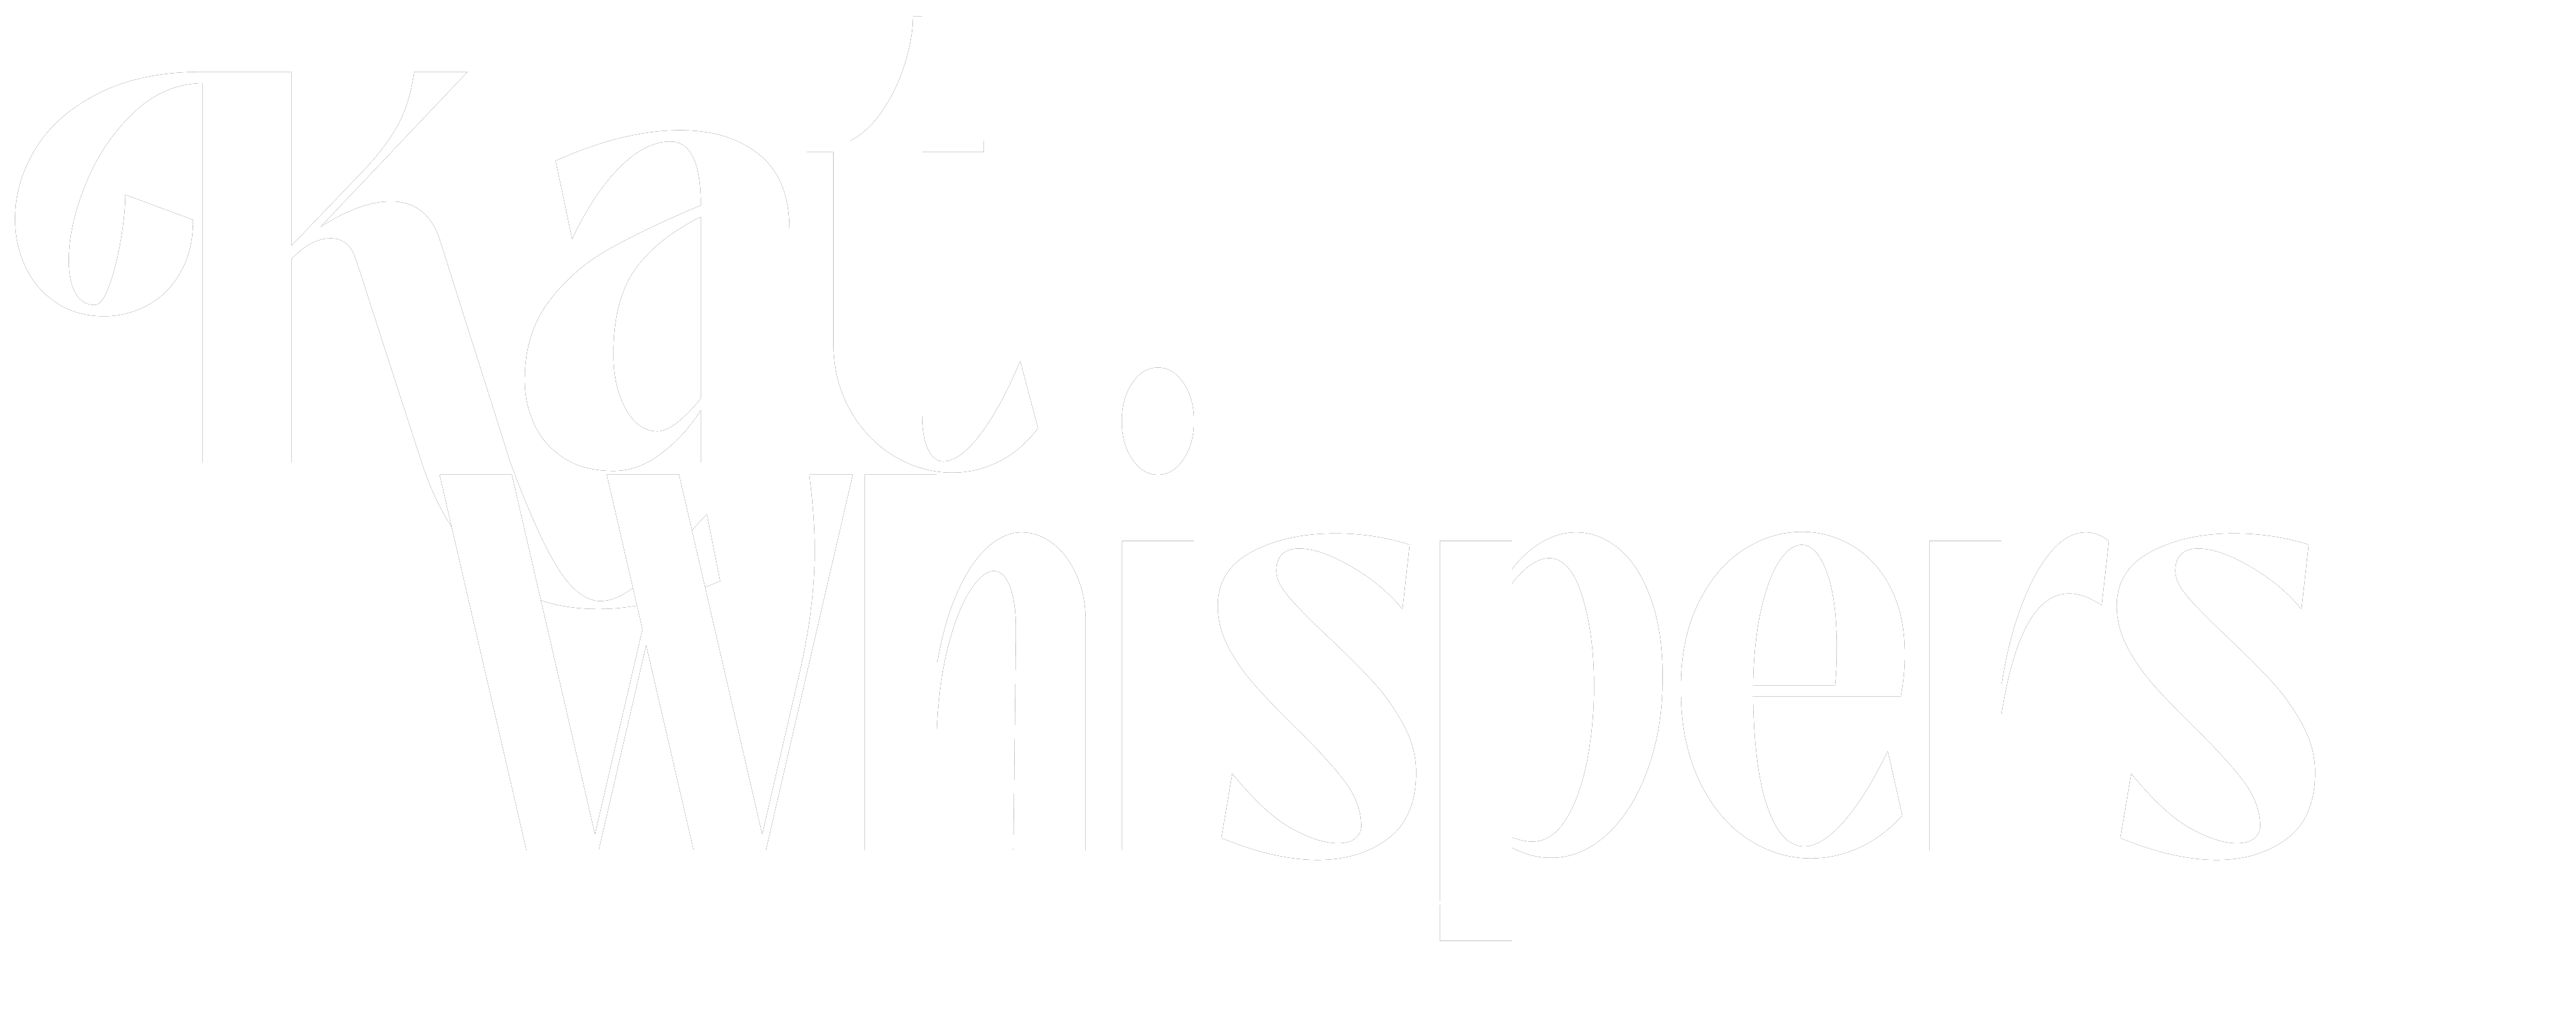 Kat Whispers